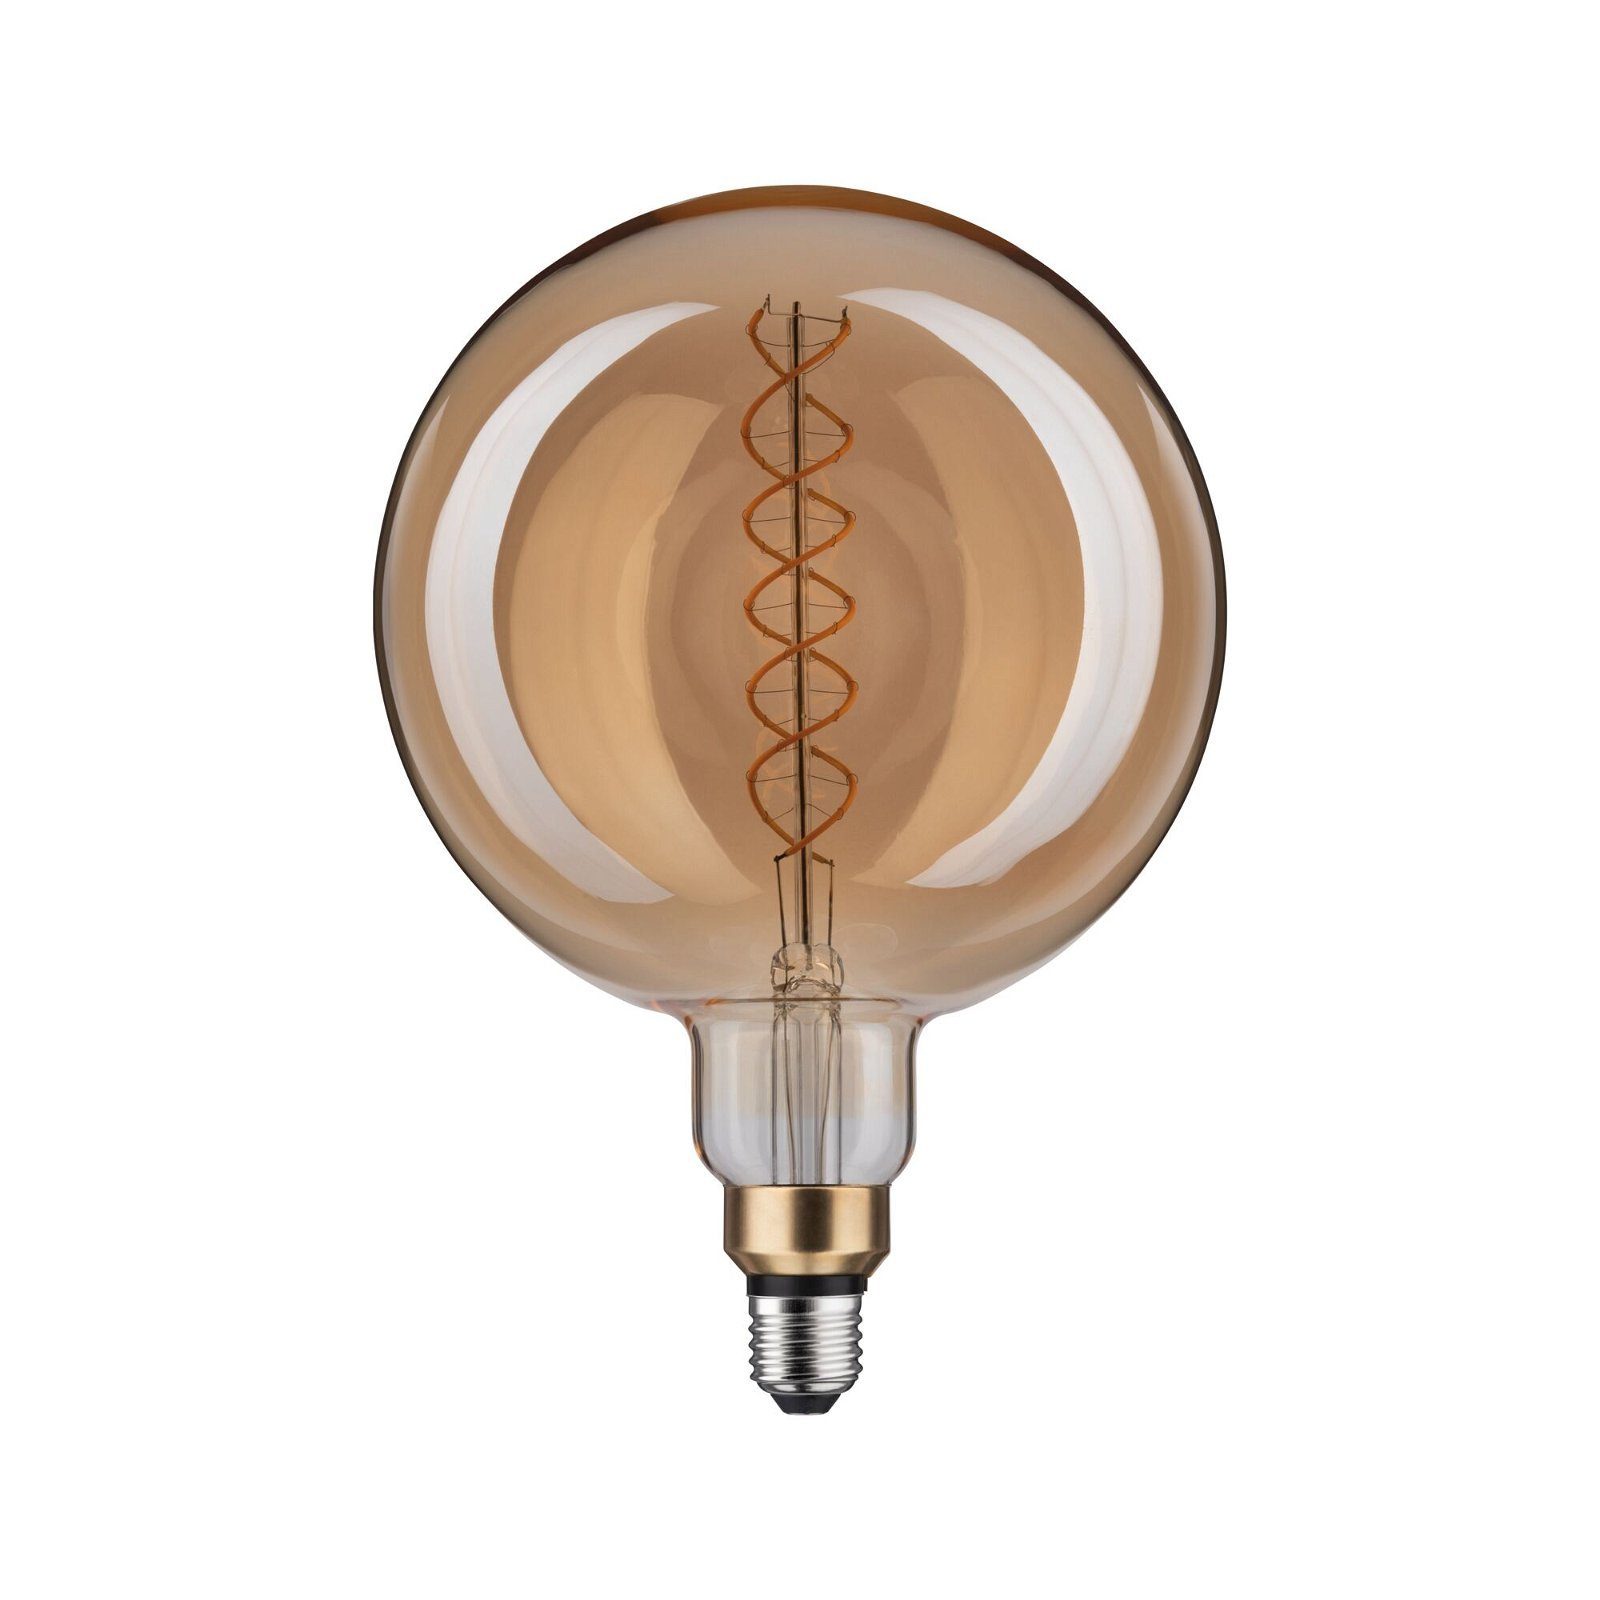 Echte Qualität Paulmann LED-Leuchtmittel BigGlobe 400lm 7W gold 1800K Filament, 230V St. 1 spiral doppel